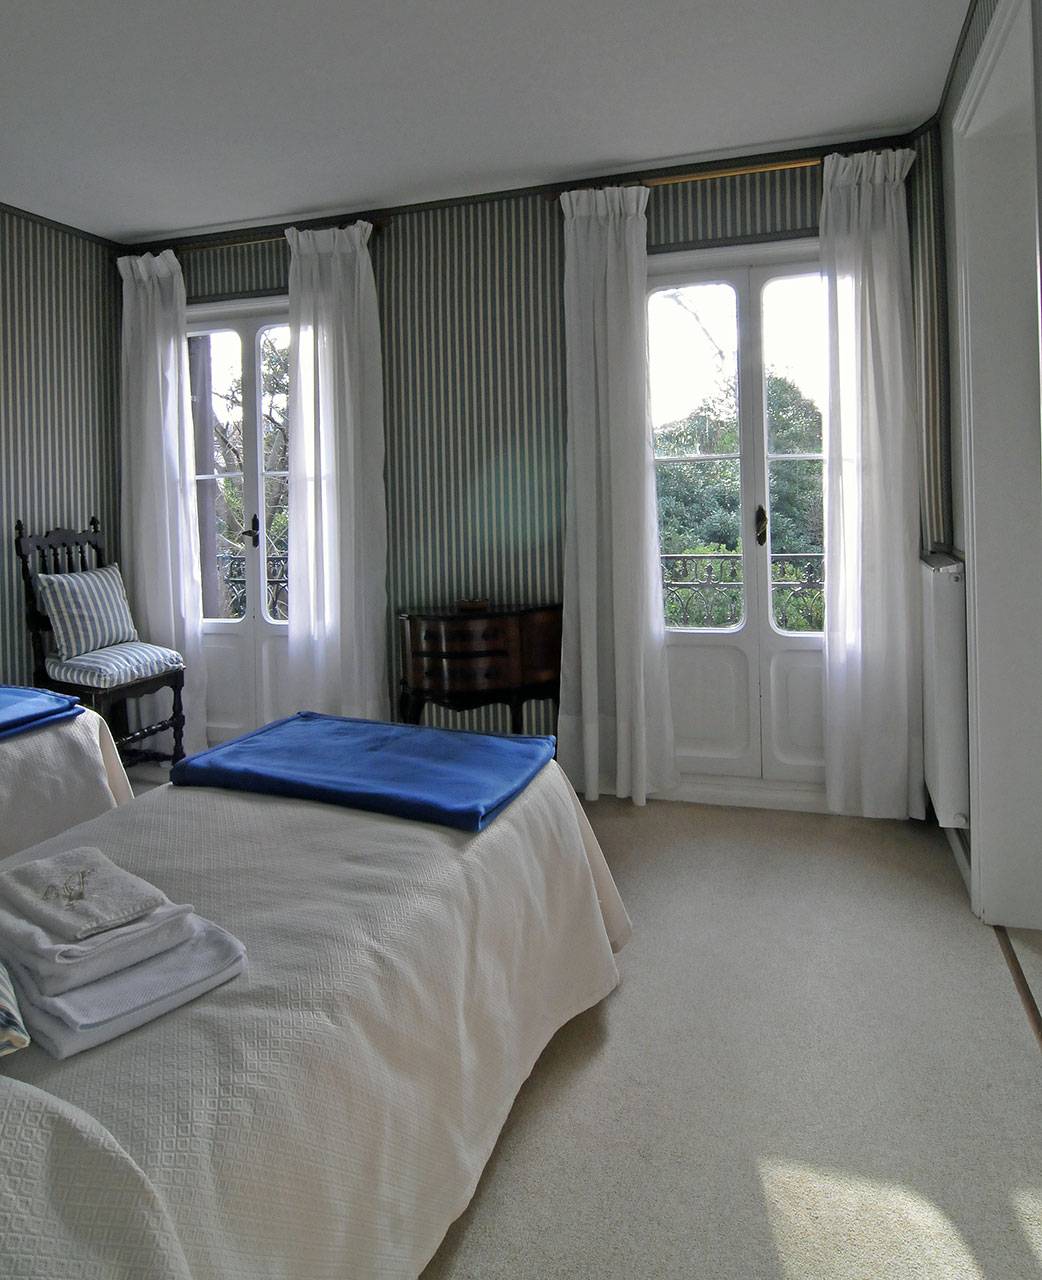 second bedroom with en-suite bathroom and balcony